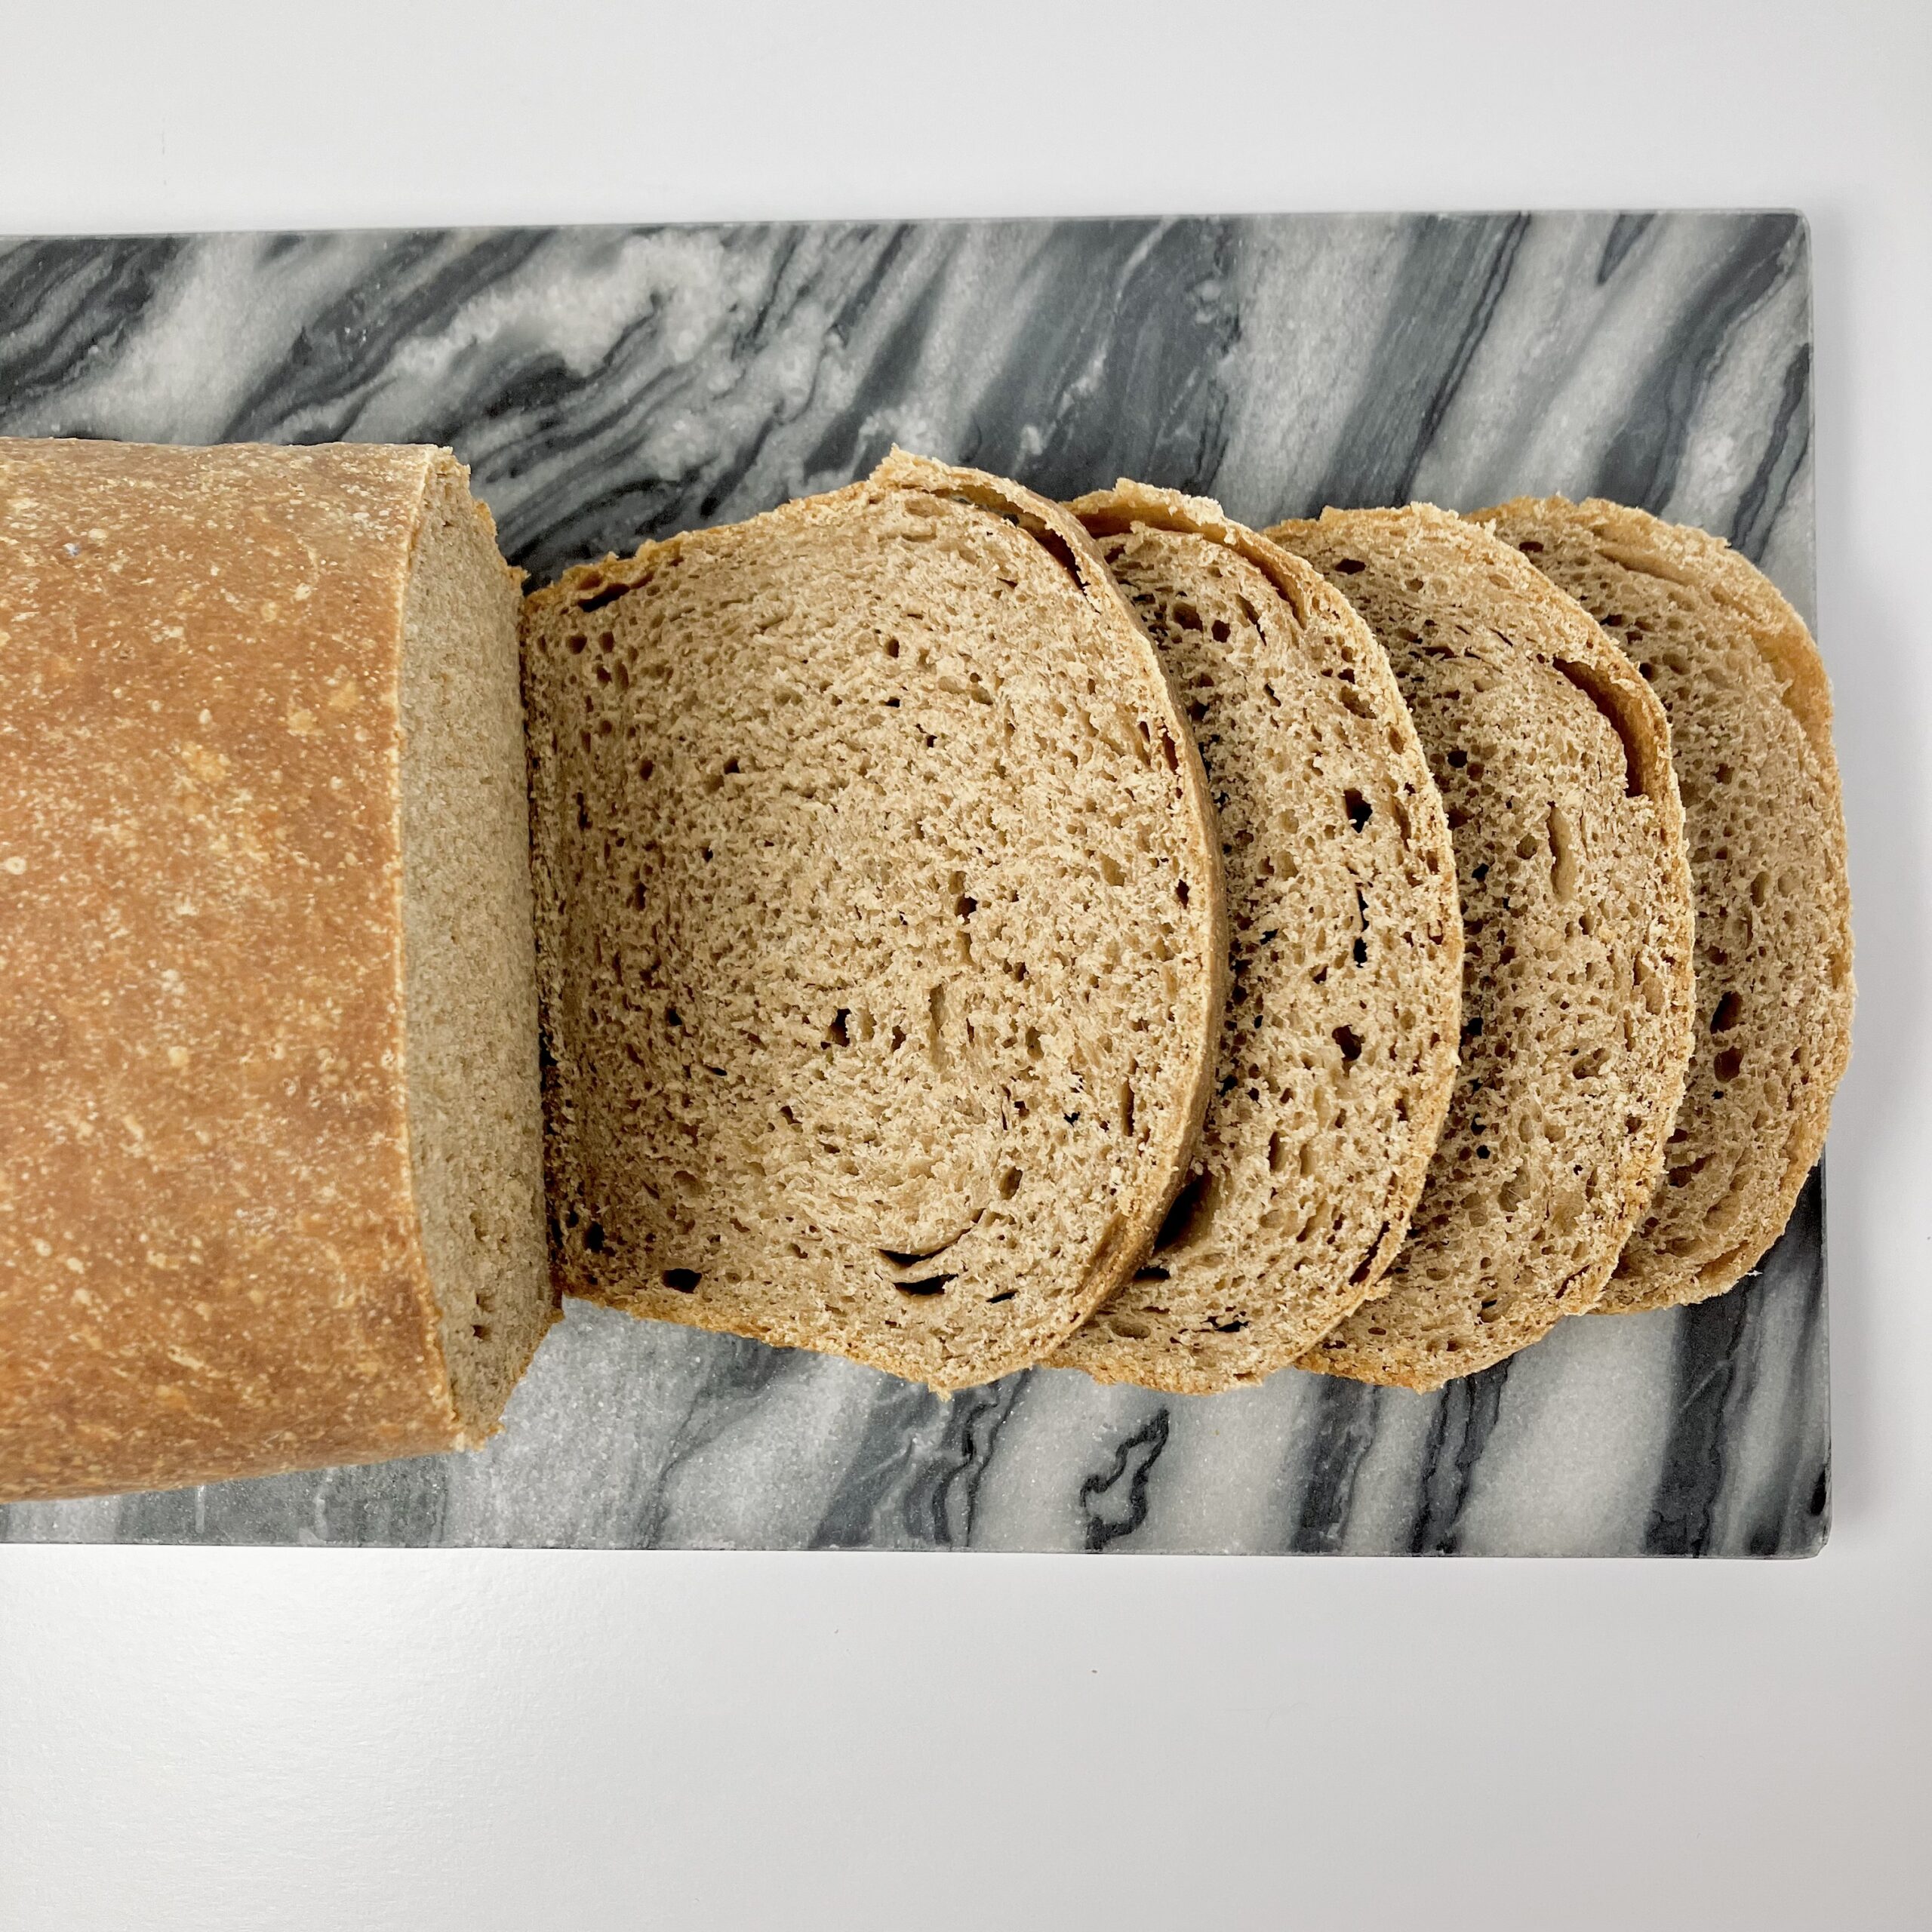 100% Whole Wheat Sourdough Sandwich Bread